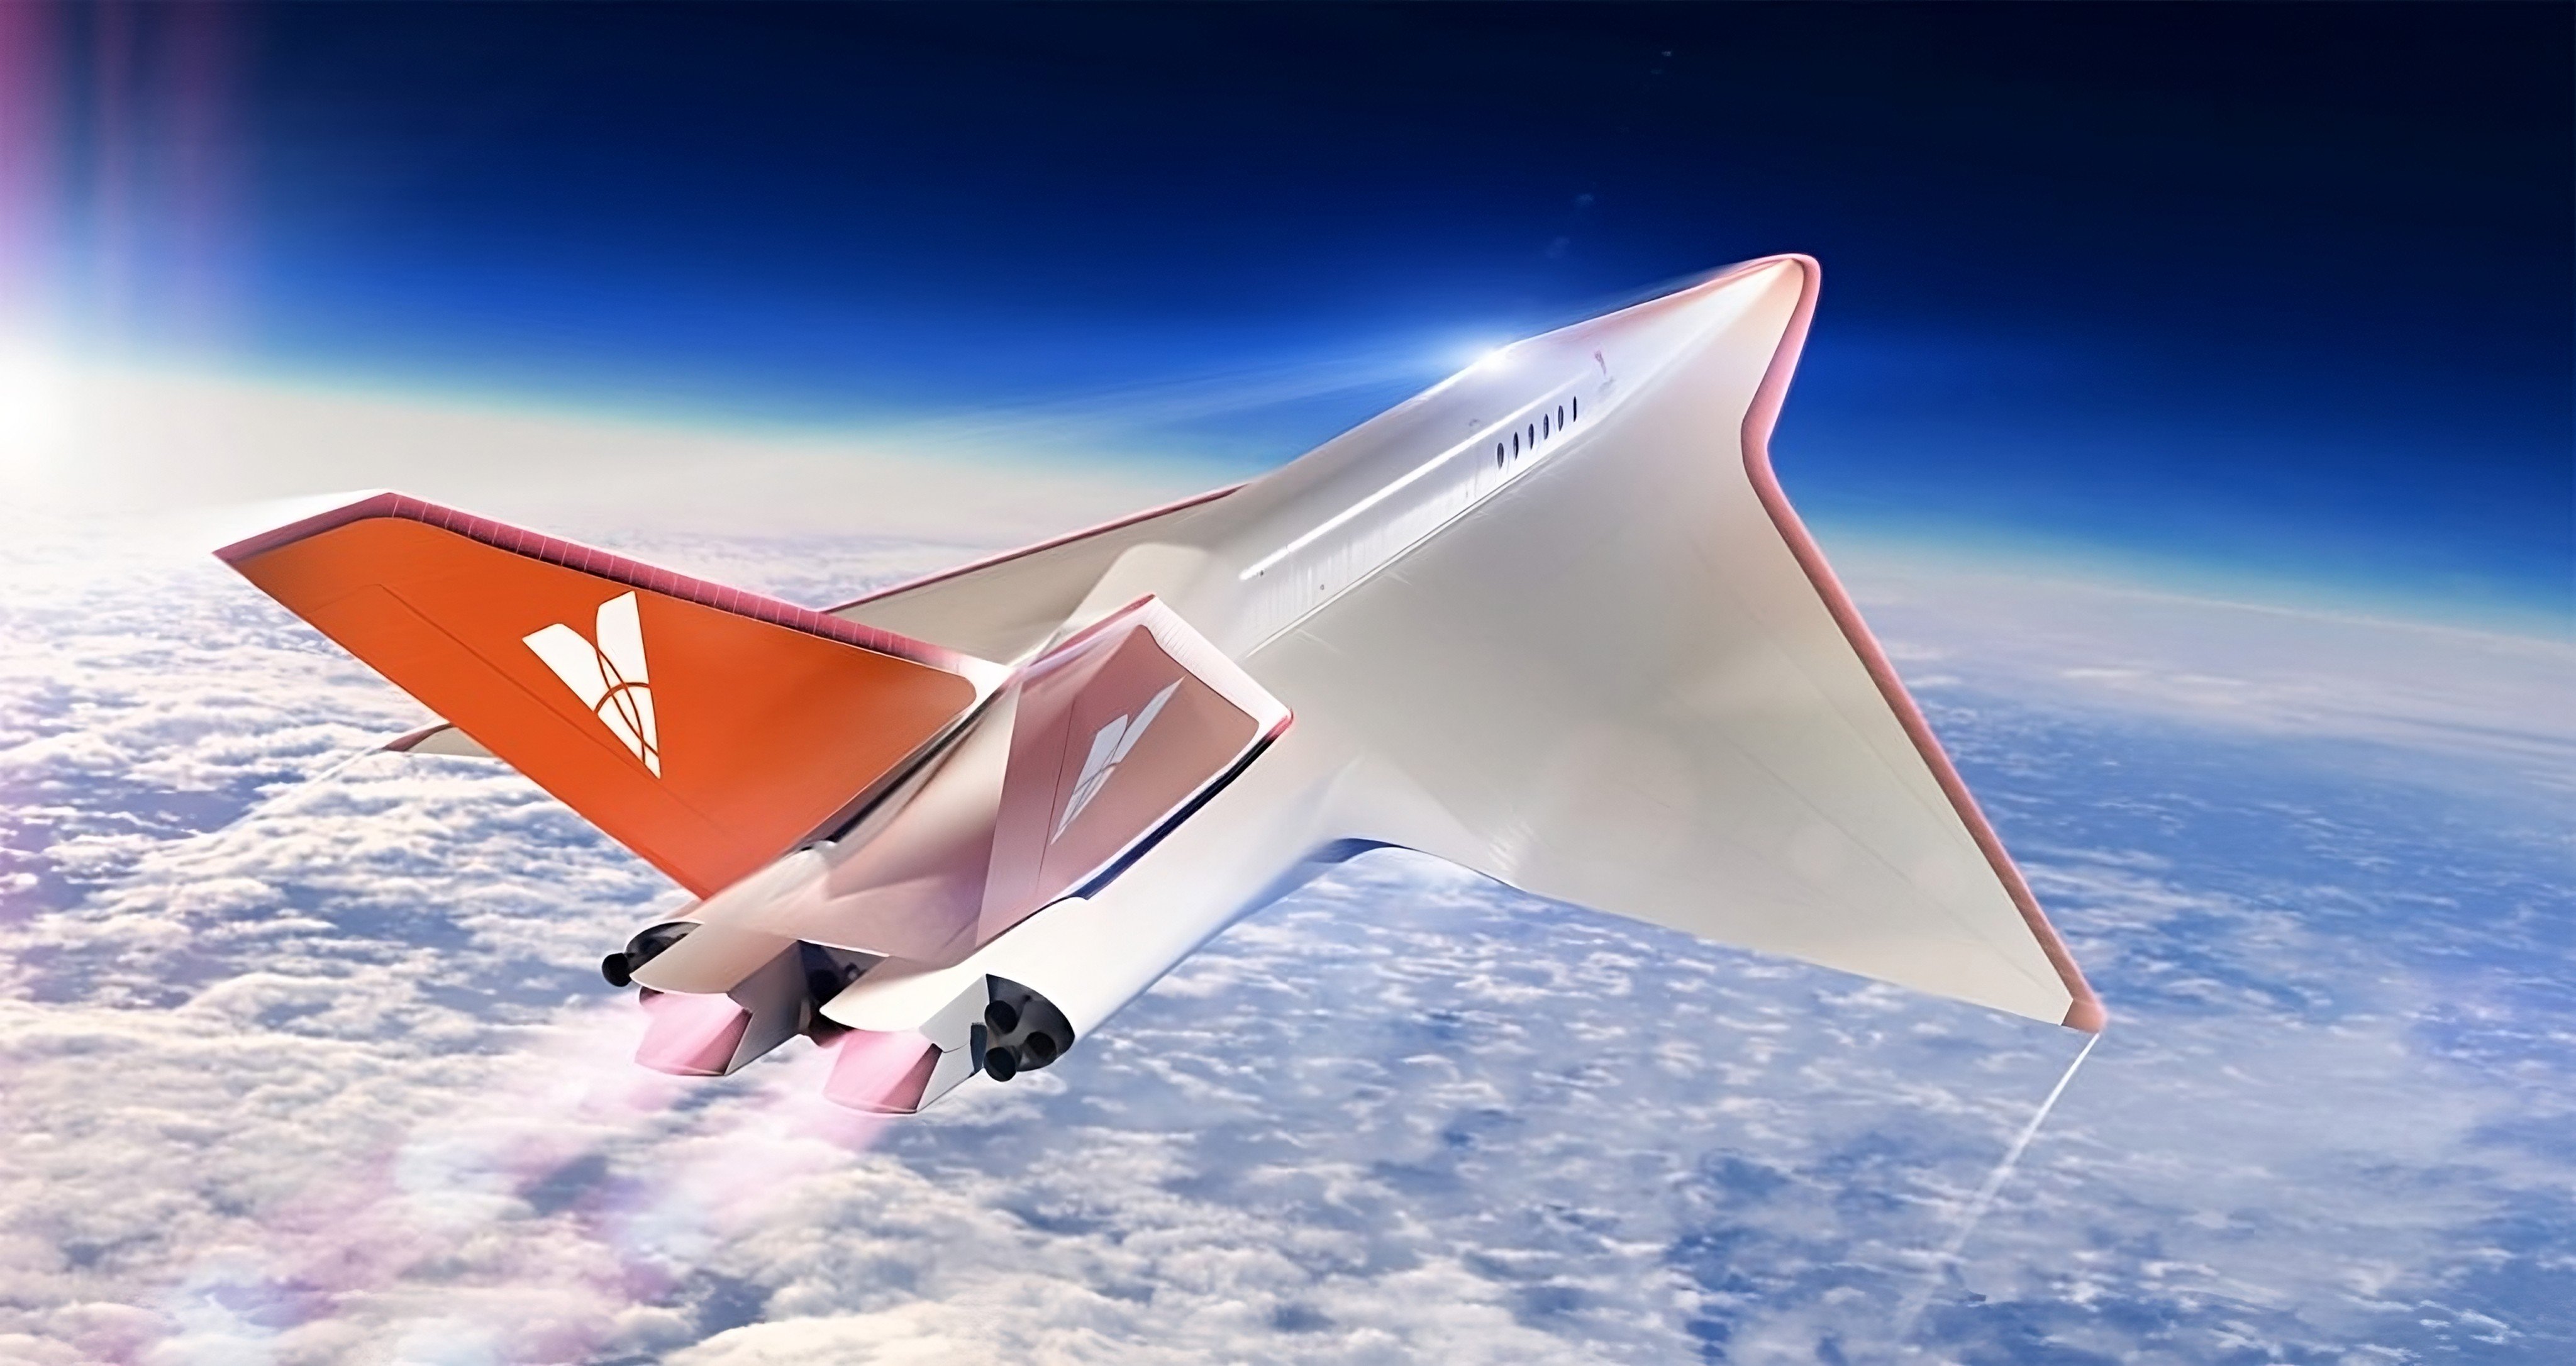 Venus Aerospace has been working on the hypersonic “Stargazer” aircraft concept since 2020. Photo: Venus Aerospace / Handout